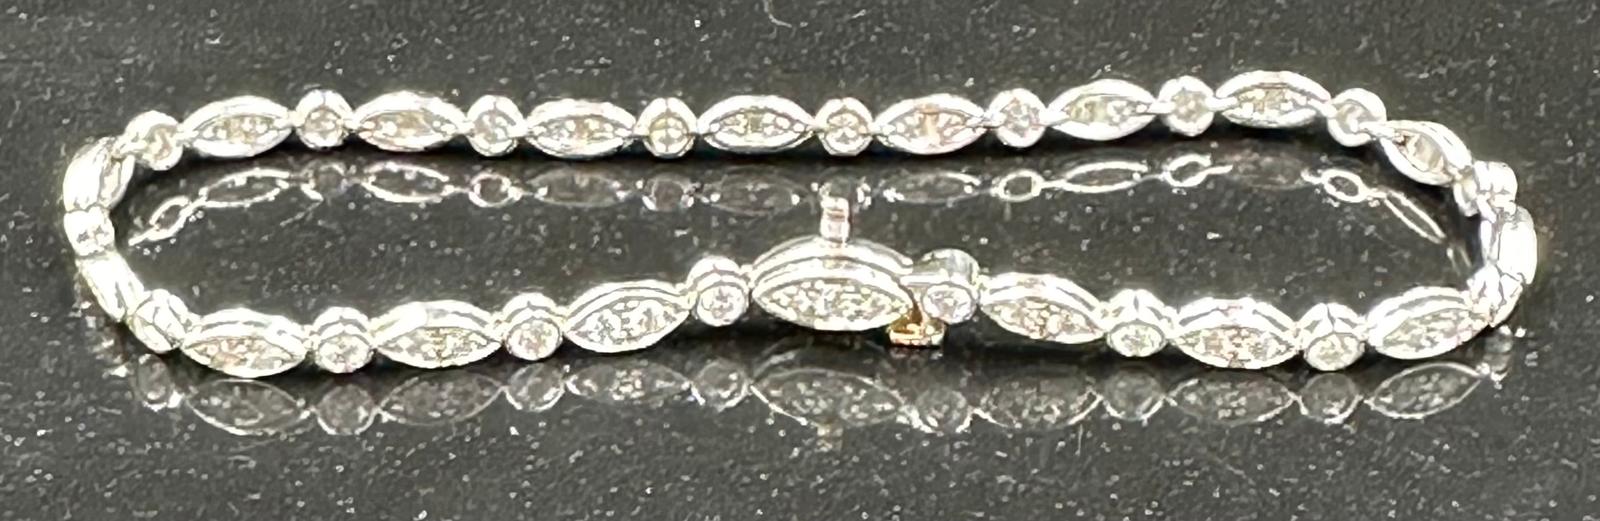 Tiffany diamond bracelet mounted in platinum. Signed Tiffany 950. Total diamond weight approximately - Image 3 of 7